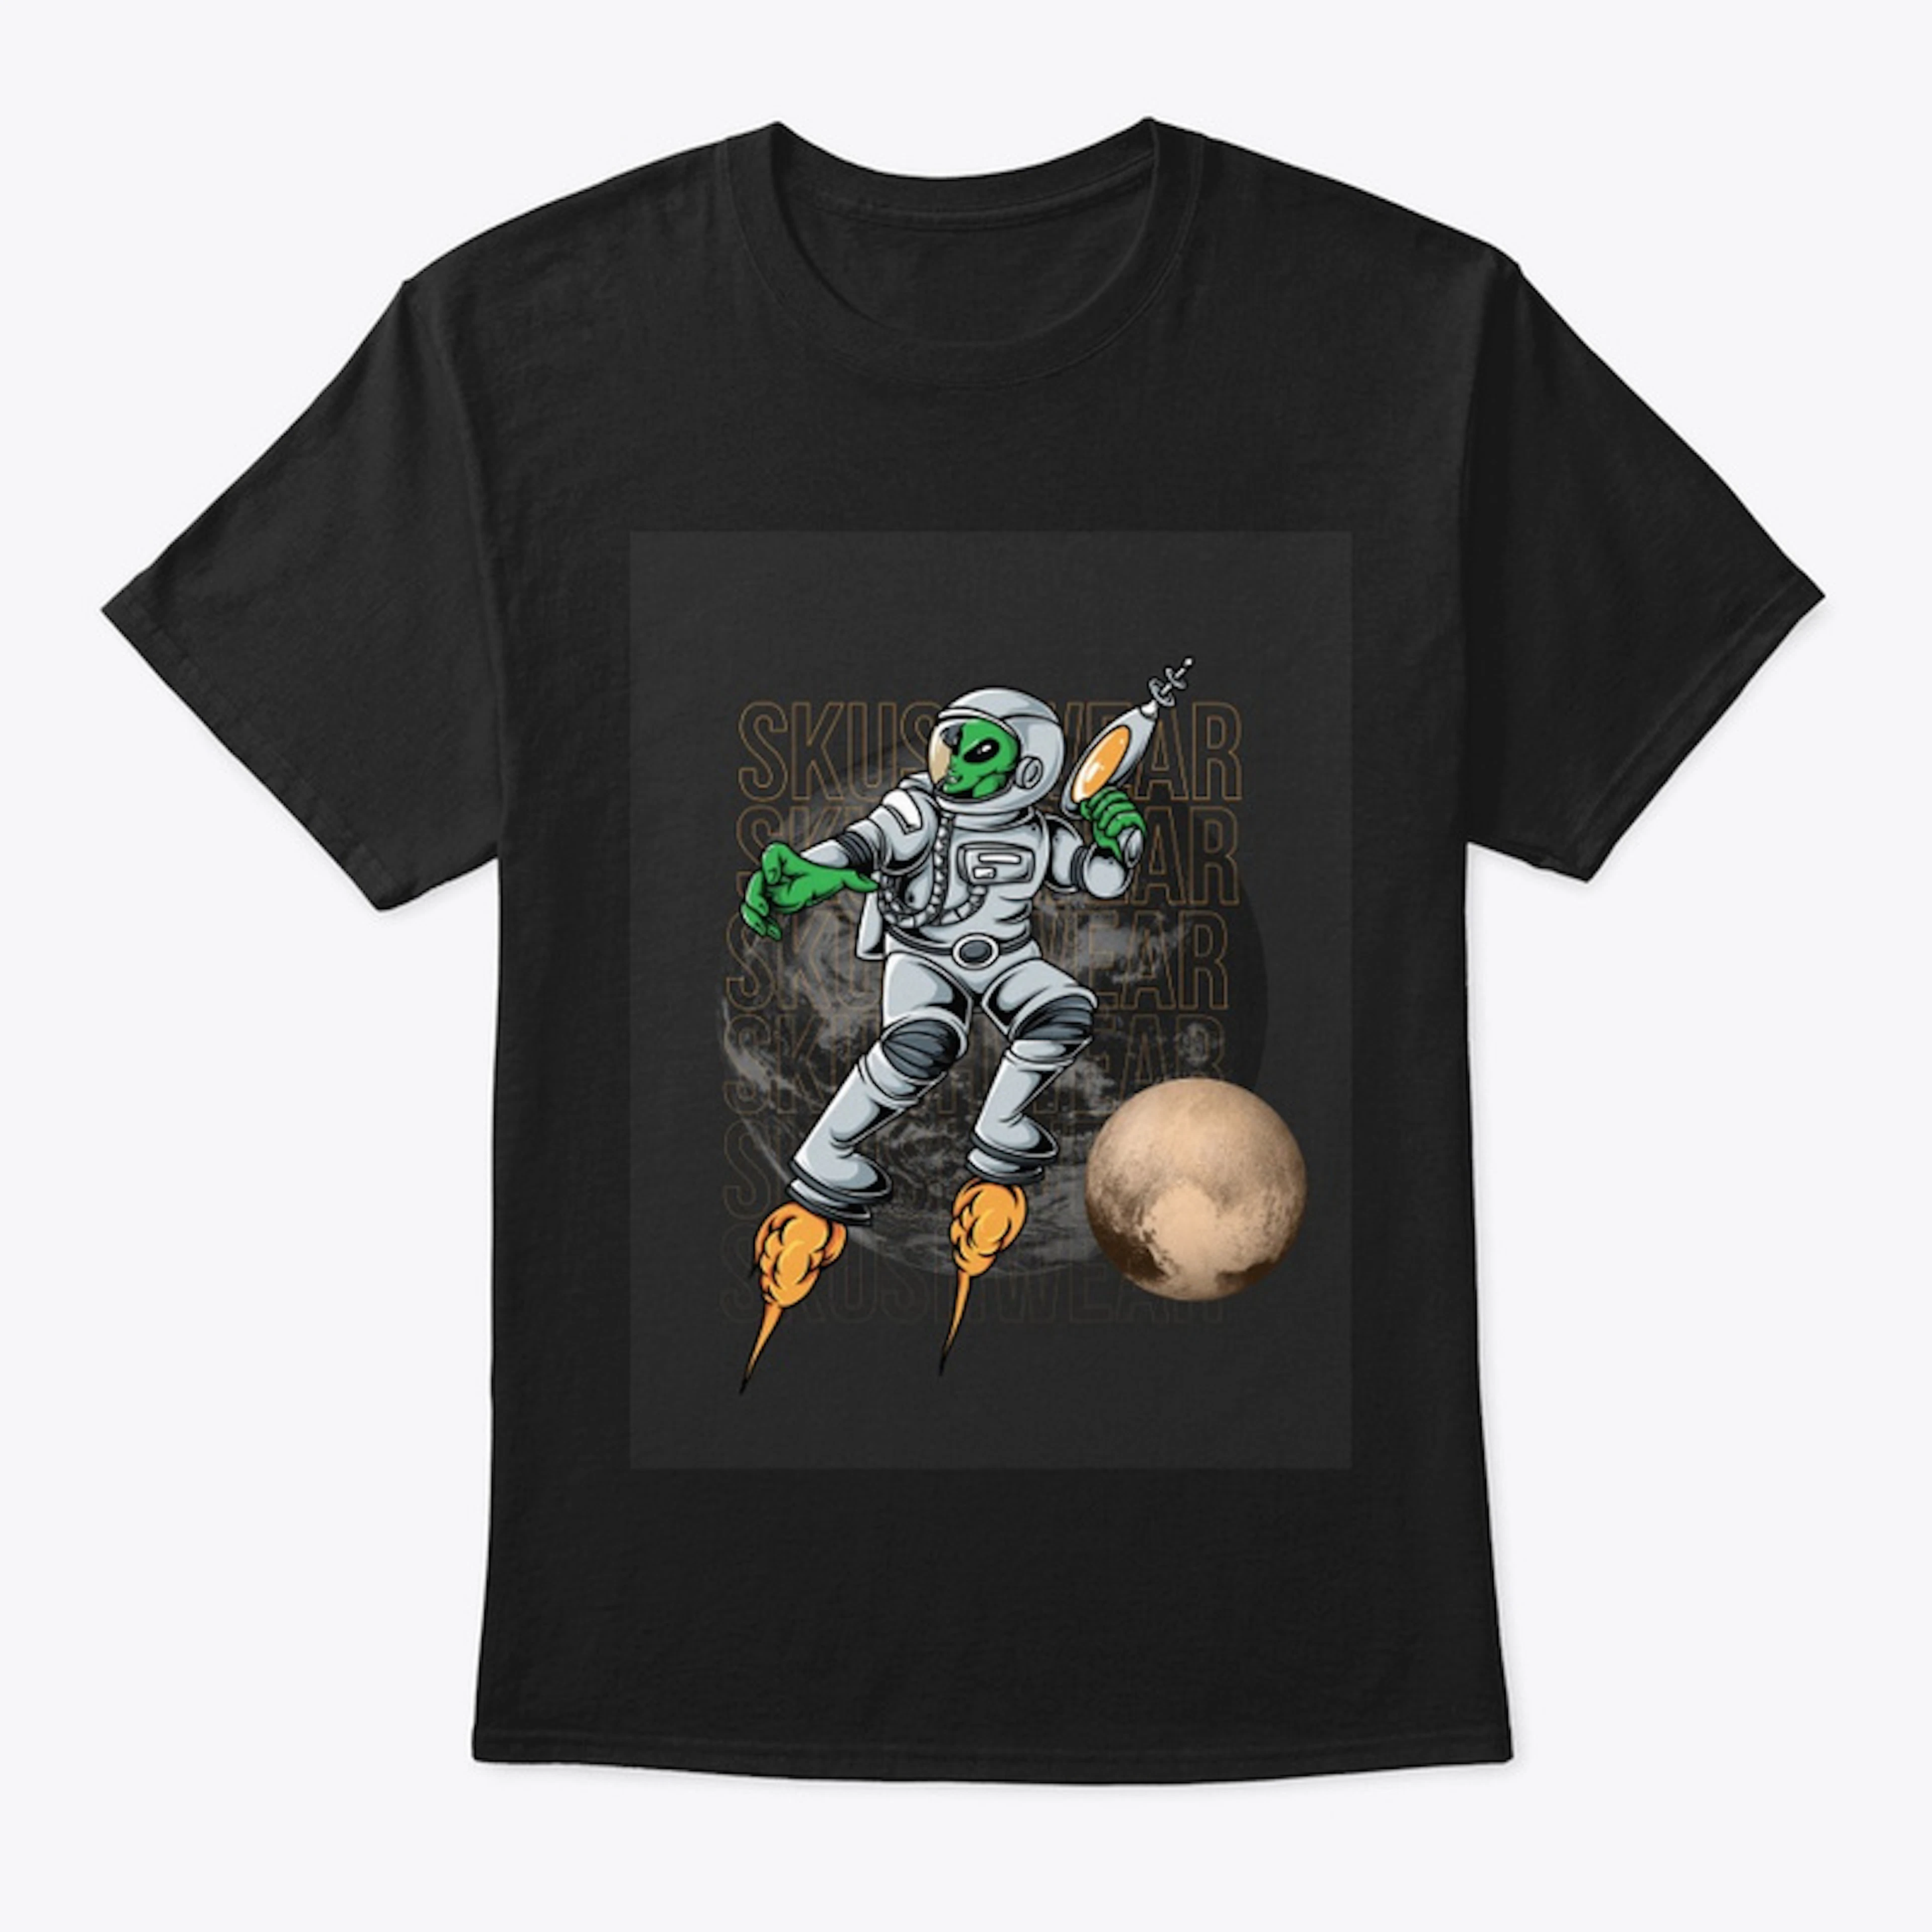 Skush alien tshirts 